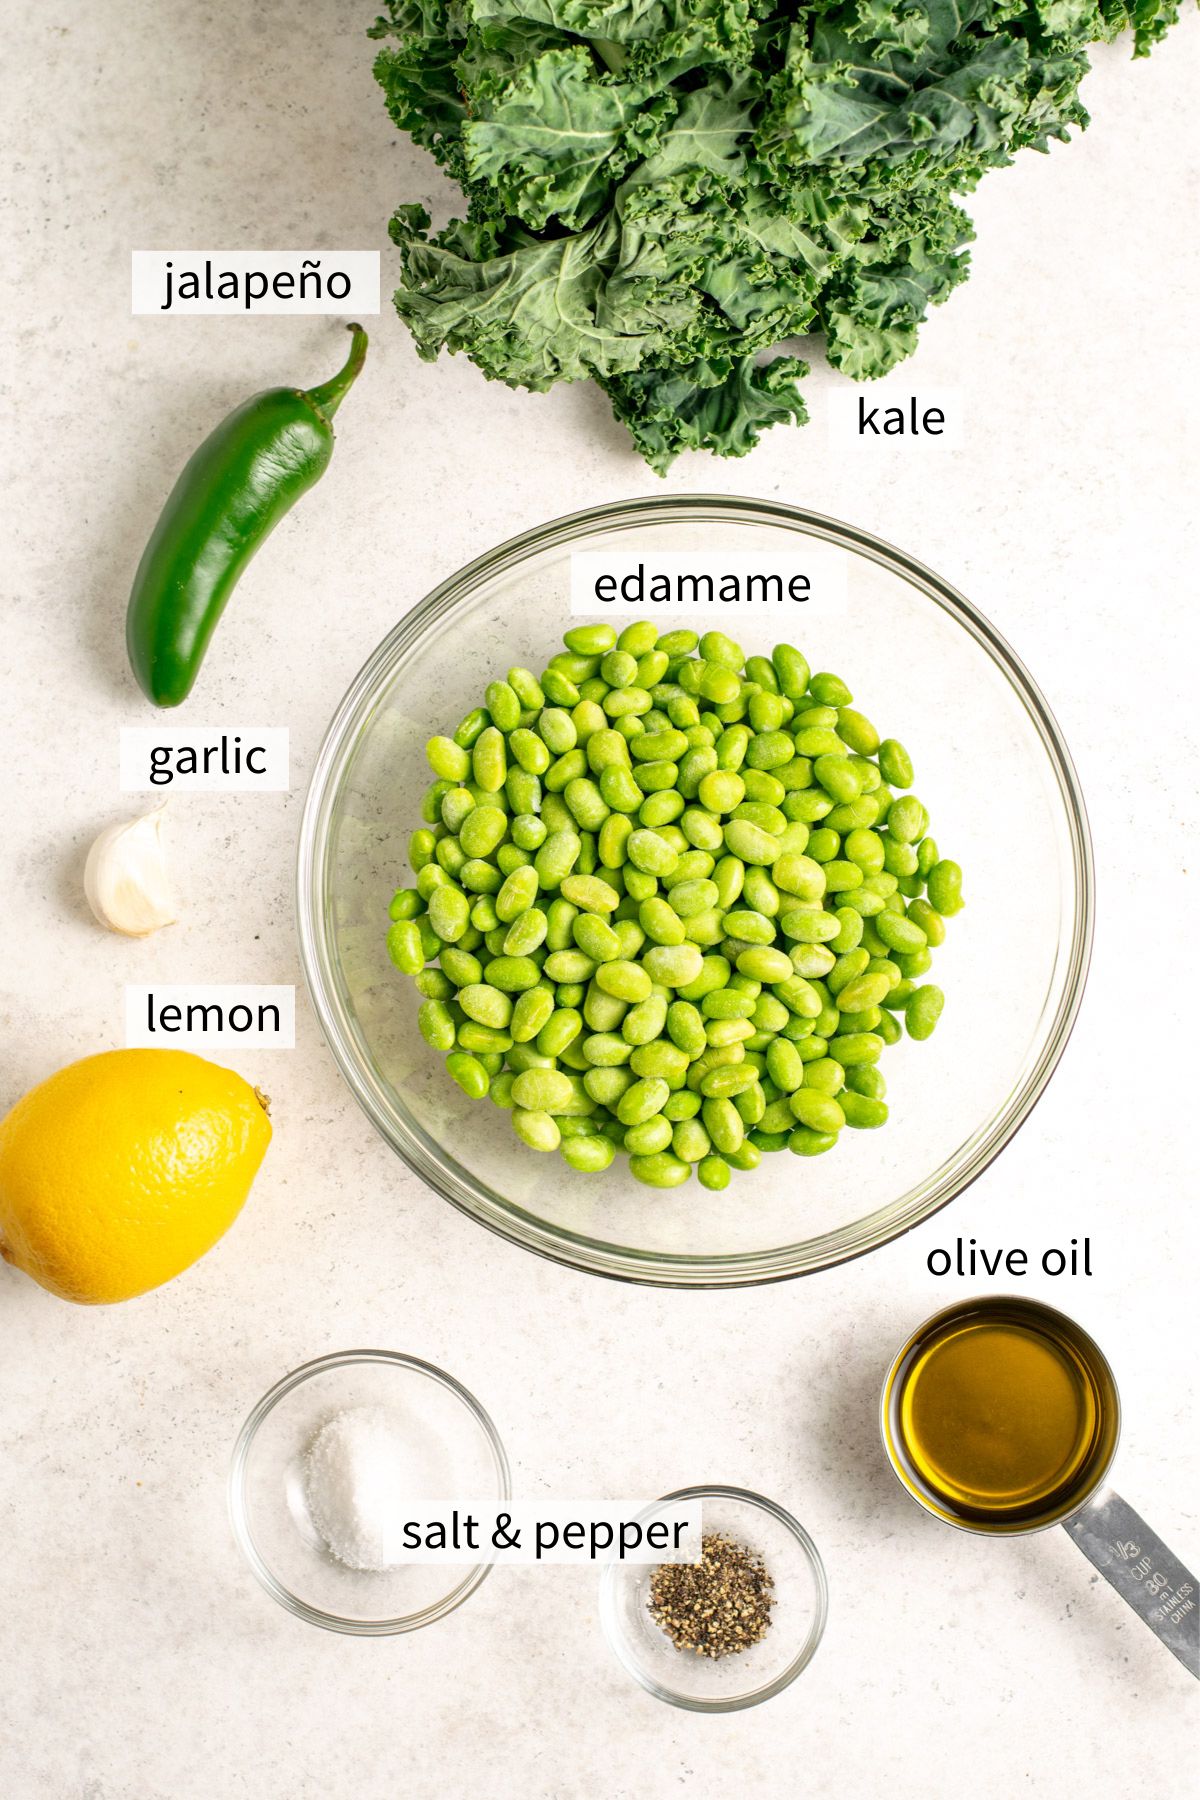 ingredients to make spicy edamame kale dip.